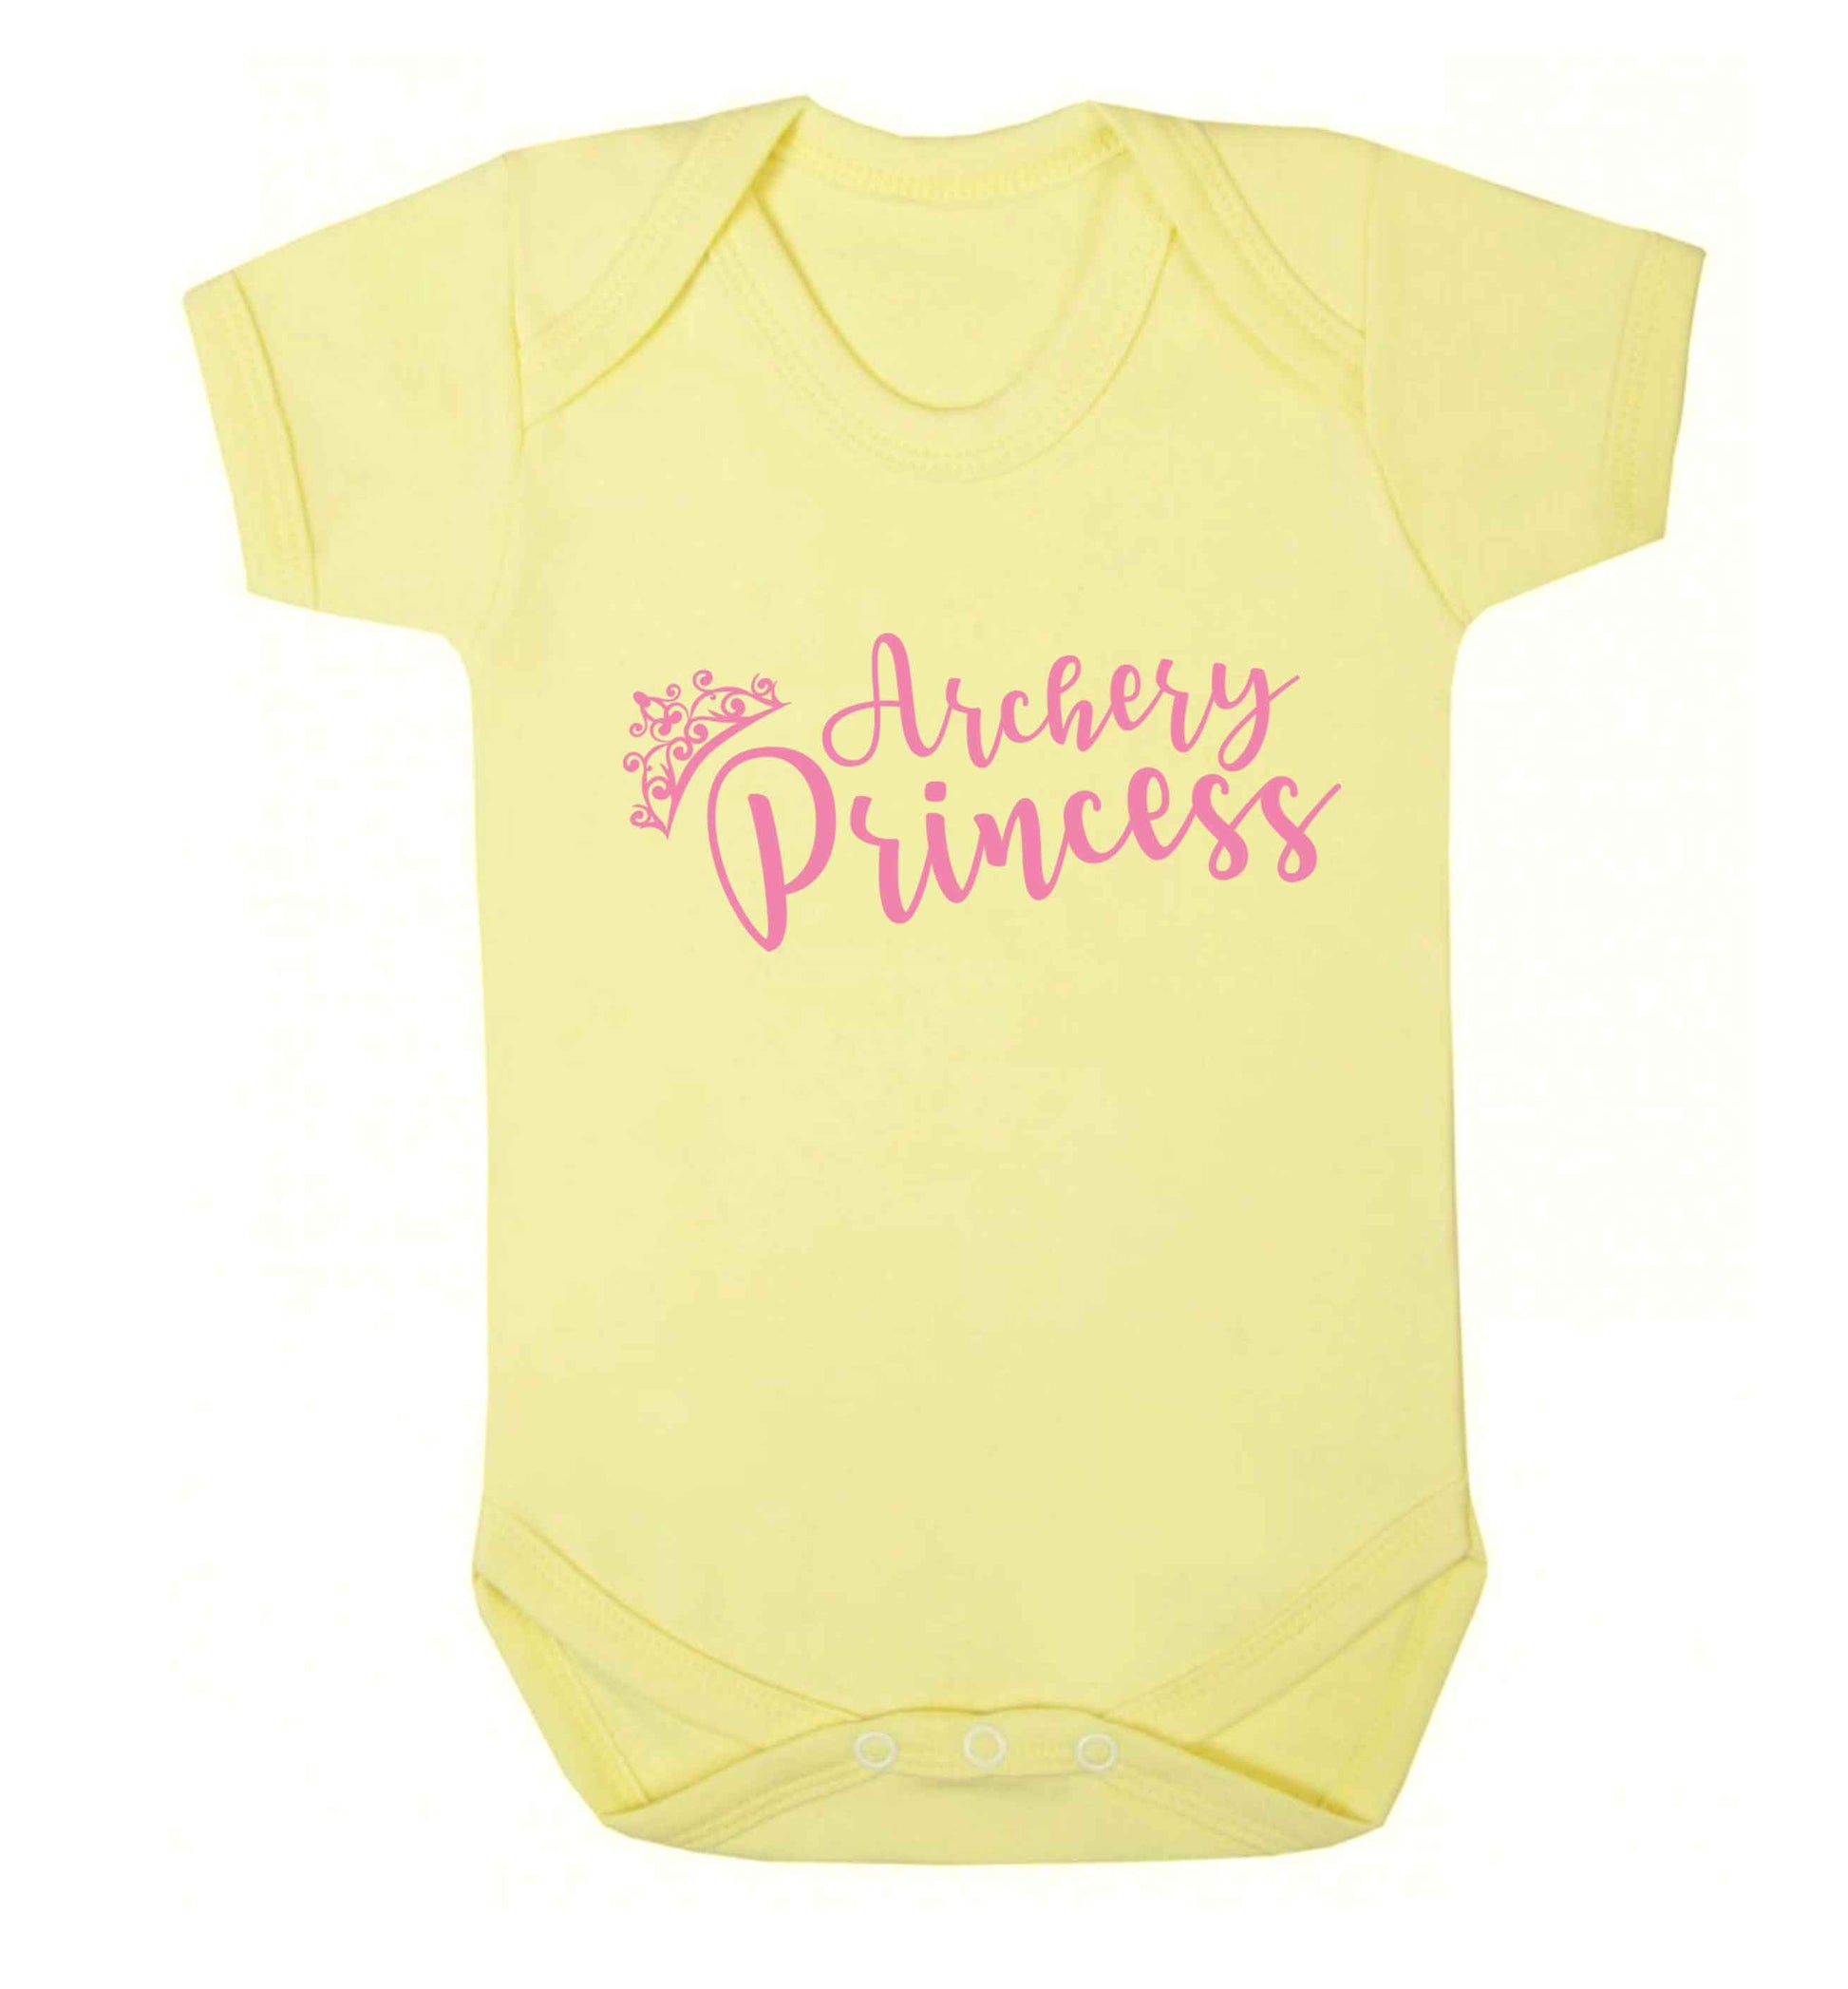 Archery princess Baby Vest pale yellow 18-24 months